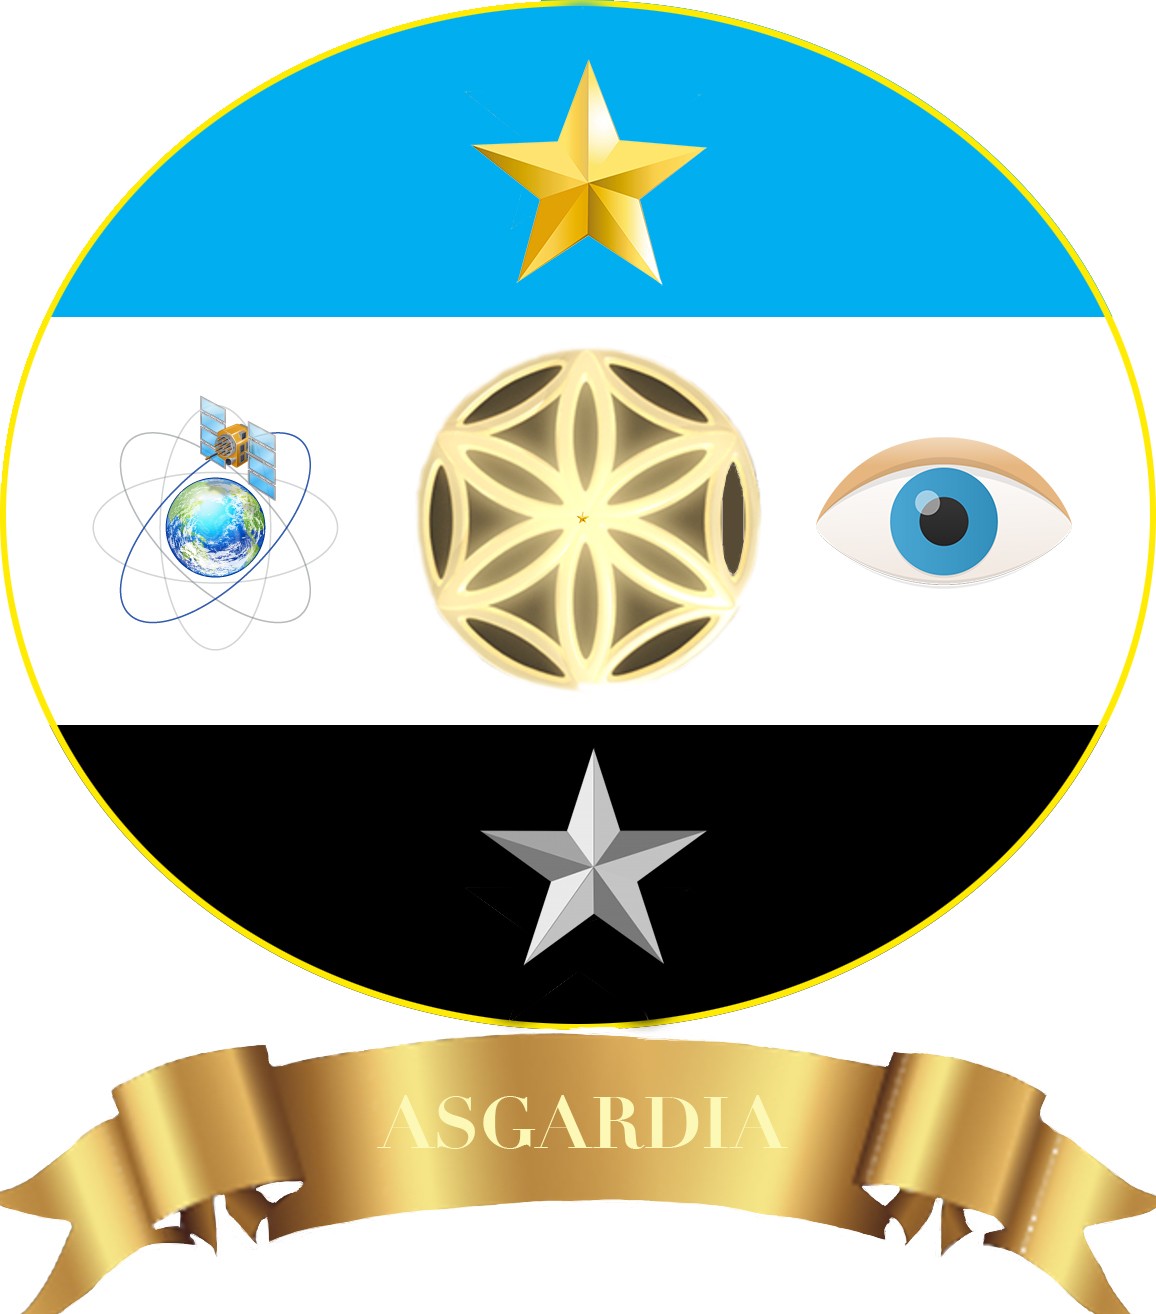 Portfolio des emblèmes de la nation Asgardia